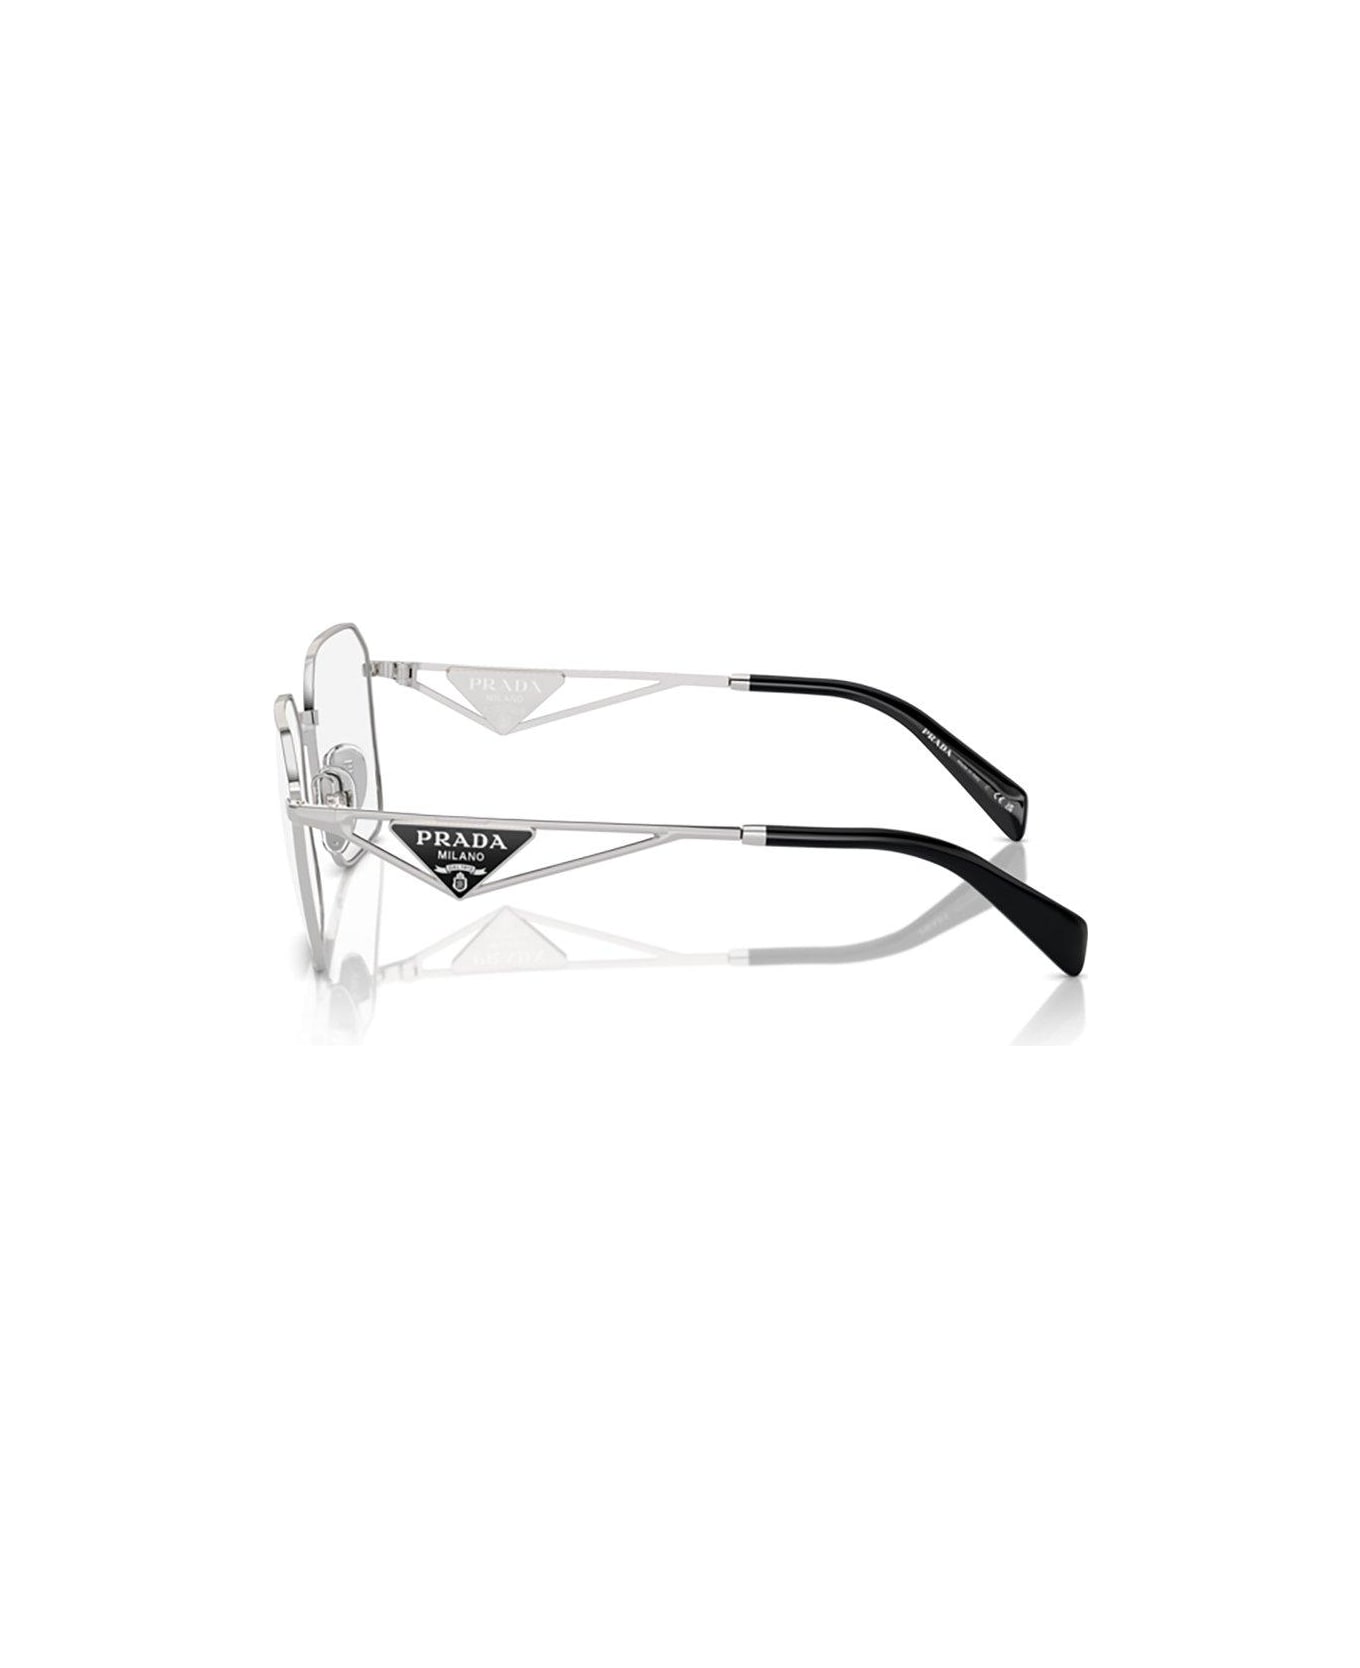 Prada Eyewear Square-frame Glasses Glasses - 1BC1O1 SILVER